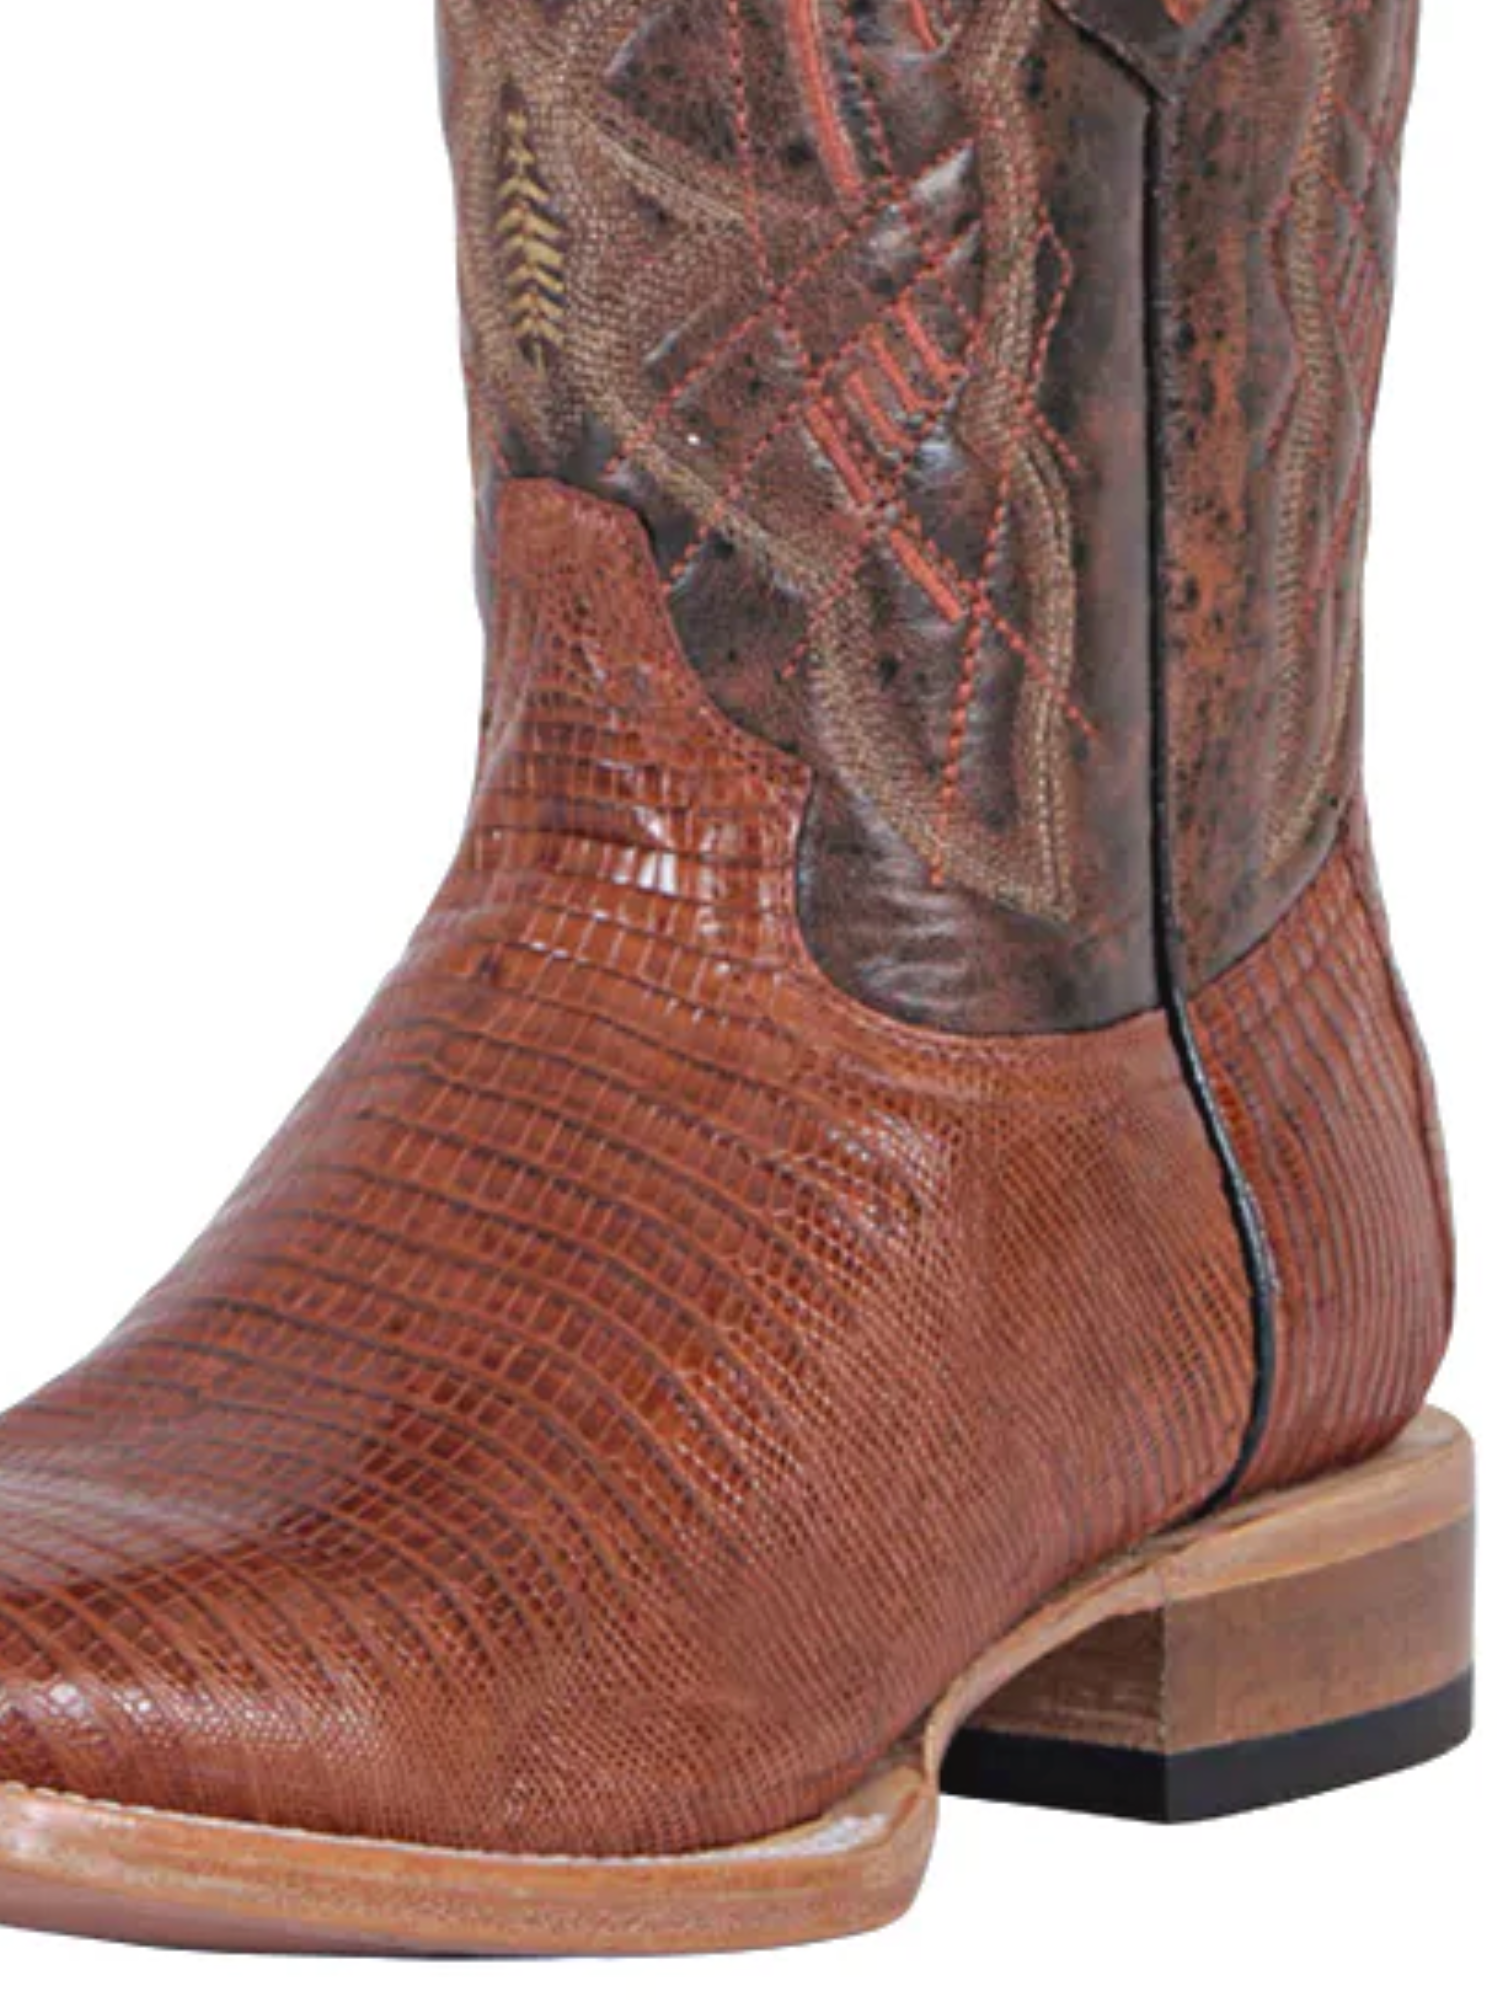 Botas Vaqueras Rodeo Exoticas de Lizard Original para Hombre 'Centenario' - ID: 124417 Cowboy Boots Centenario 